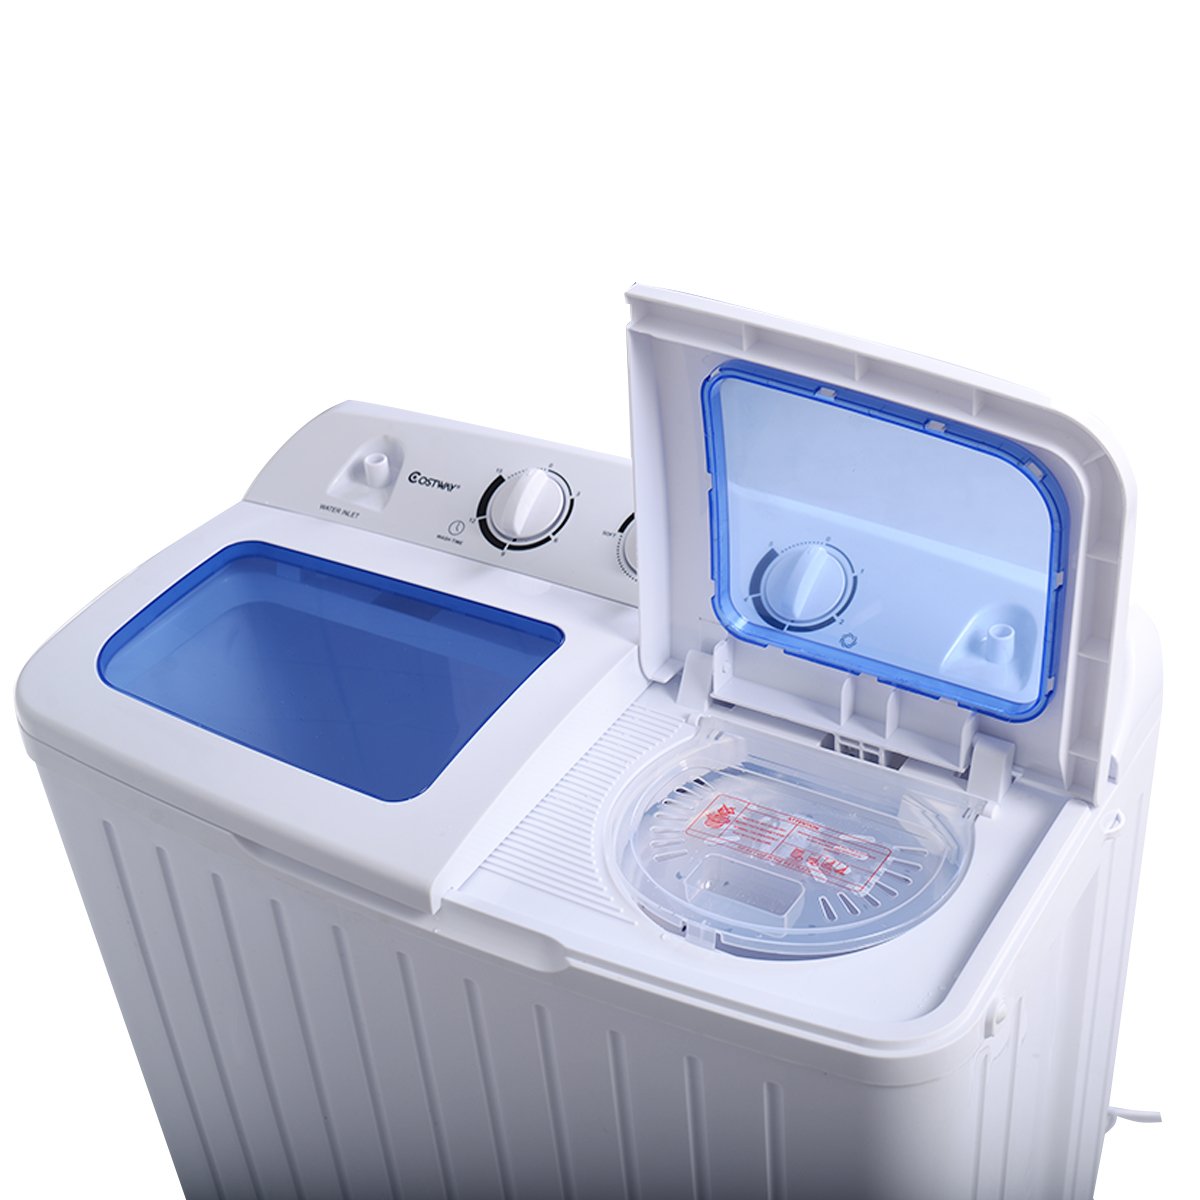 Стиральная машинка для дачи с отжимом. Washing Machine мини стиральная машина. Мини стиральная машинка EASYMAXX. Стиральная машина Willmark WM-20a Малютка 2кг. Стиральная машина Willmark WMA-602p.